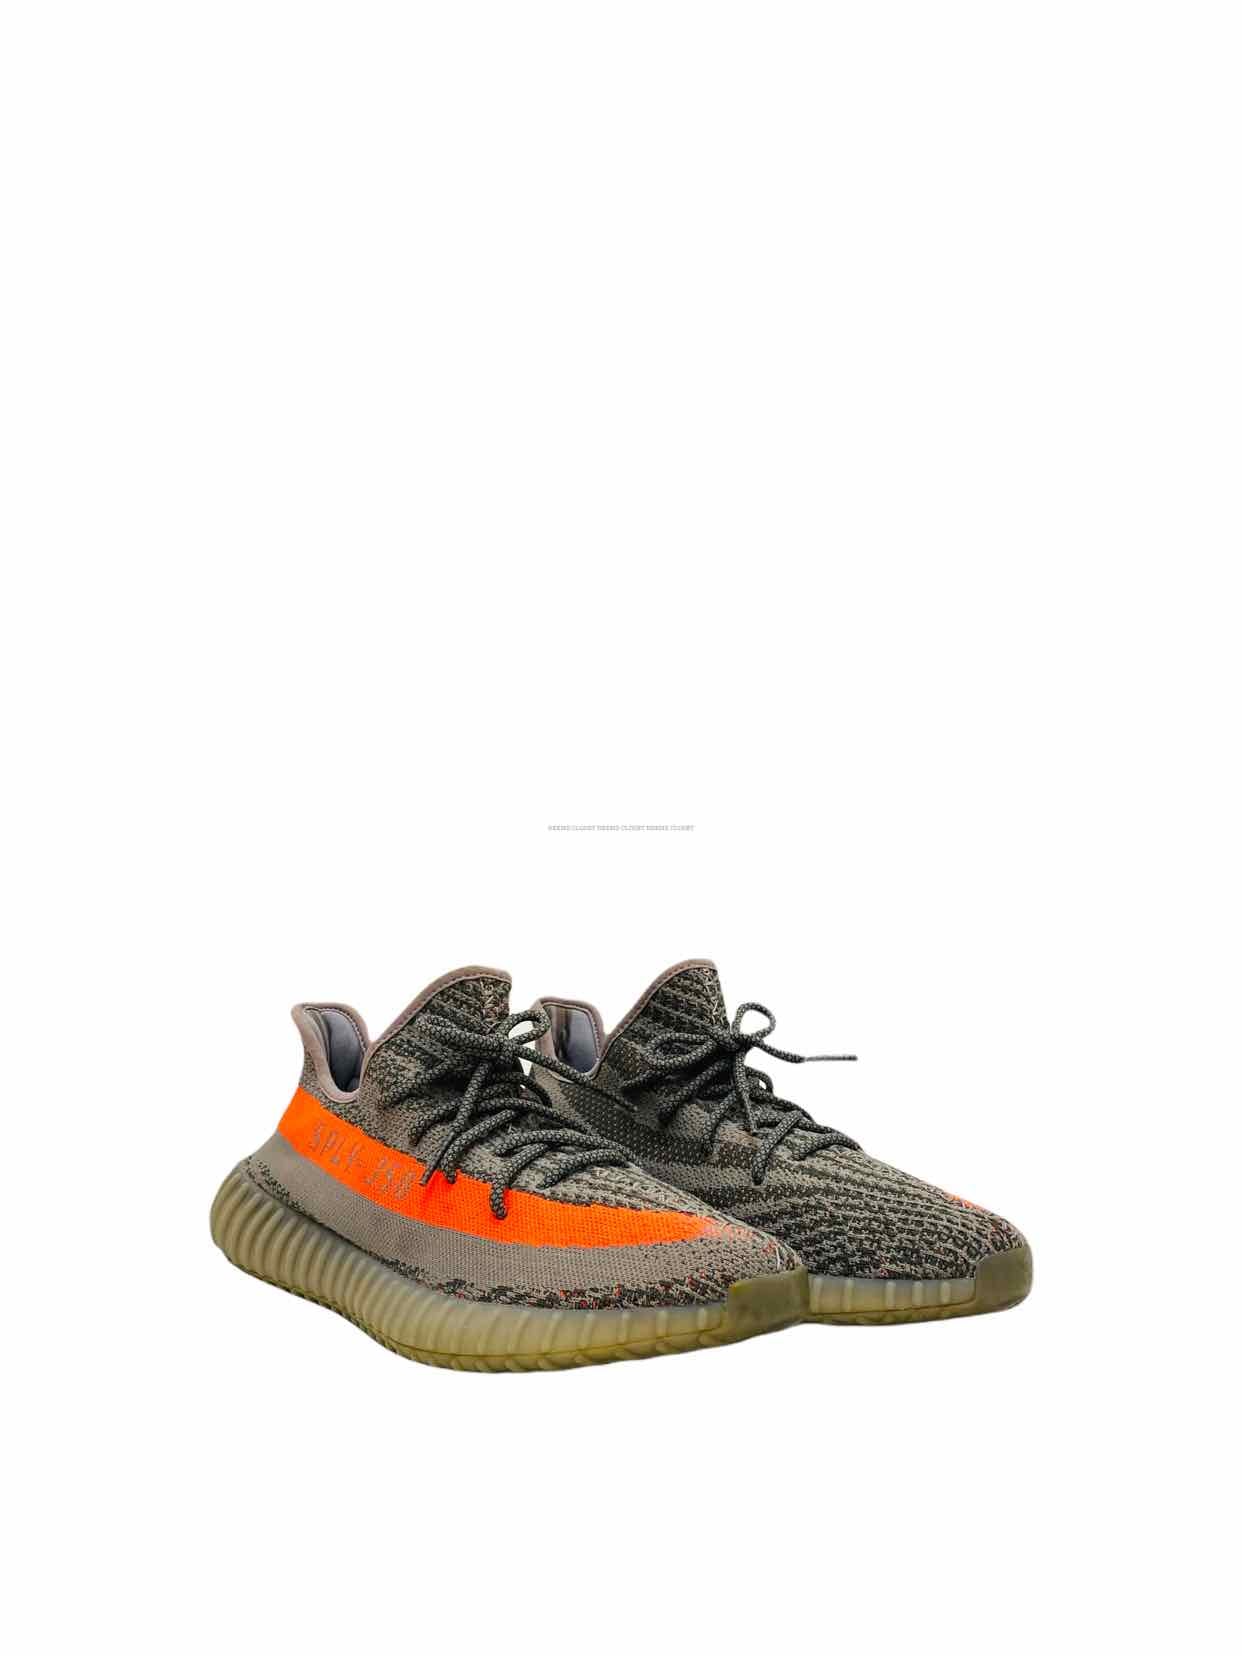 ADIDAS Yeezy 500 Grey w/ Orange Sneakers